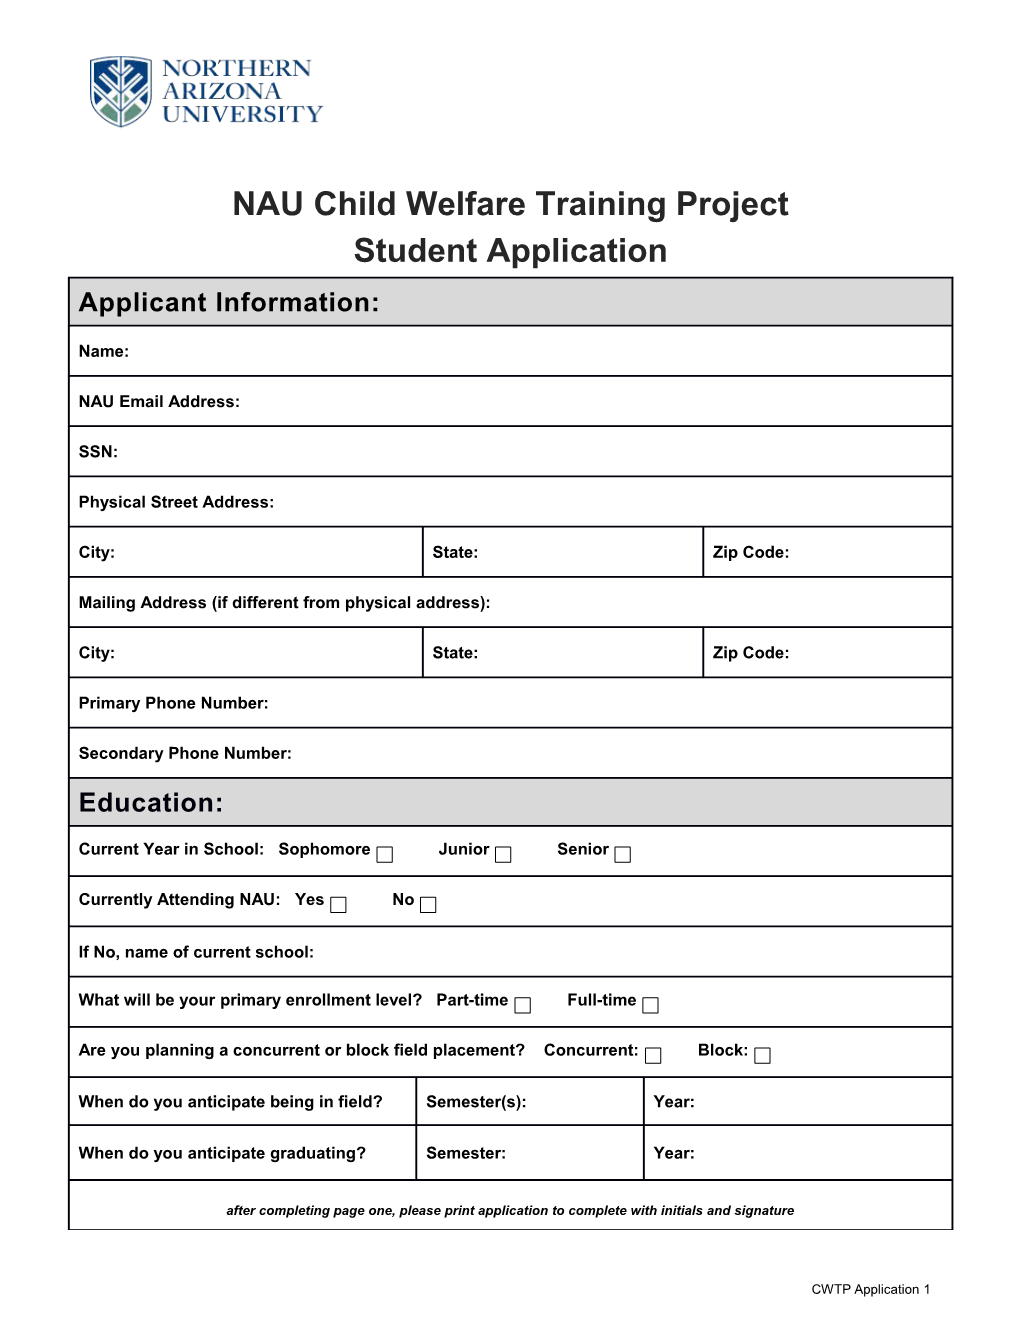 NAU Child Welfare Training Project